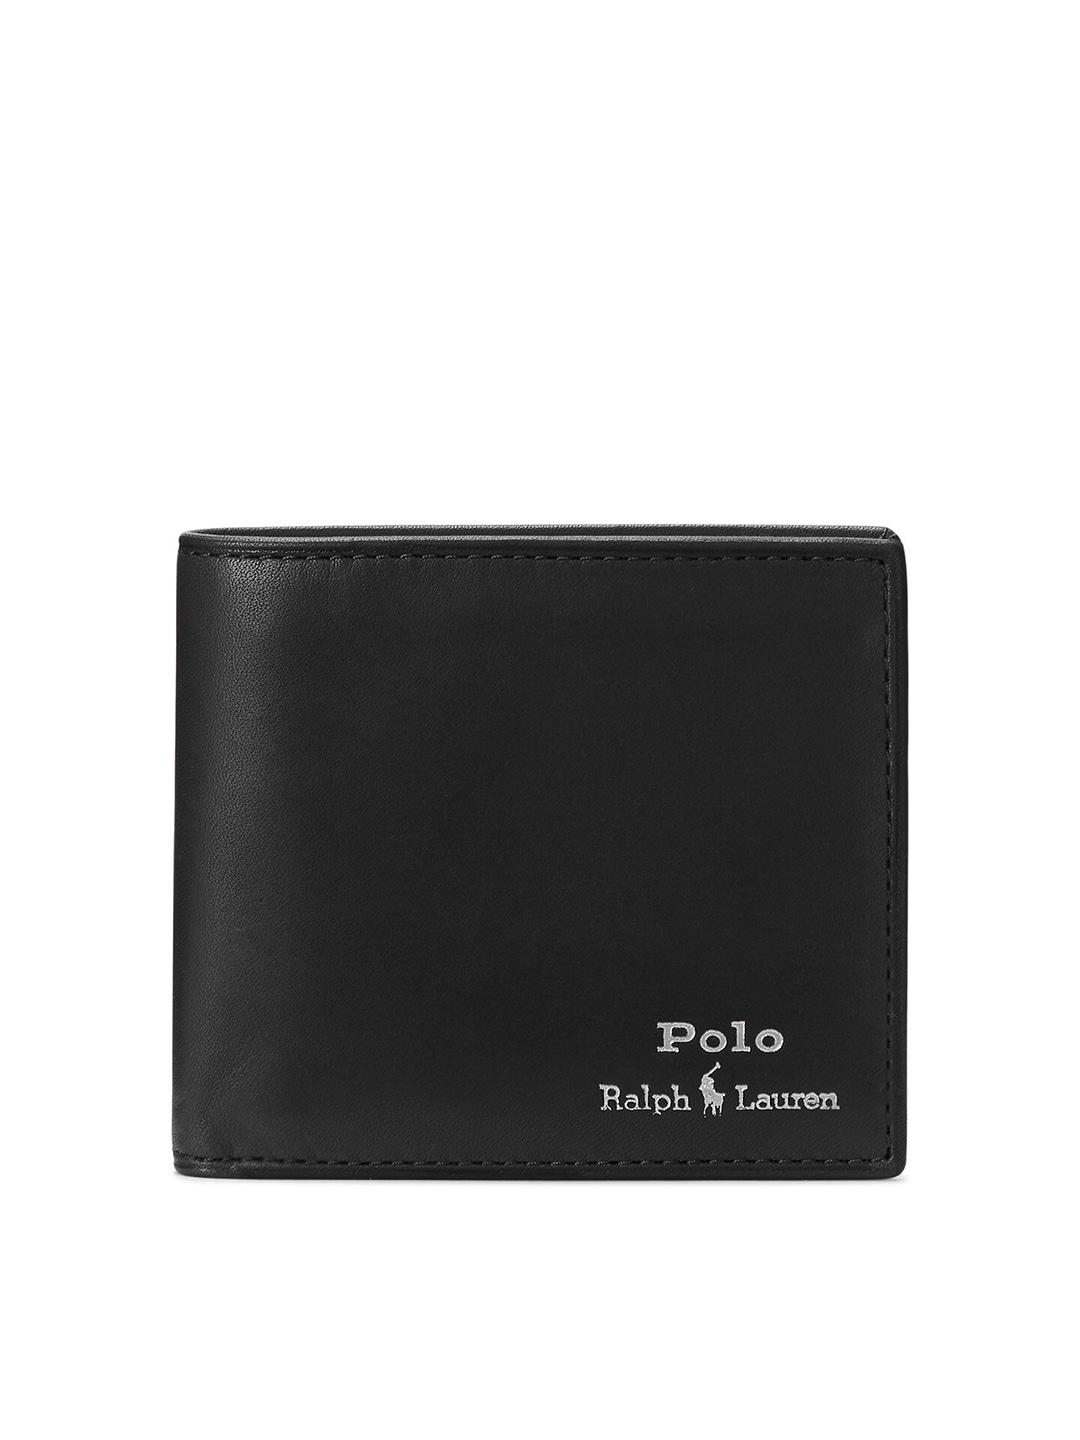 polo ralph lauren men brand logo printed leather billfold wallet